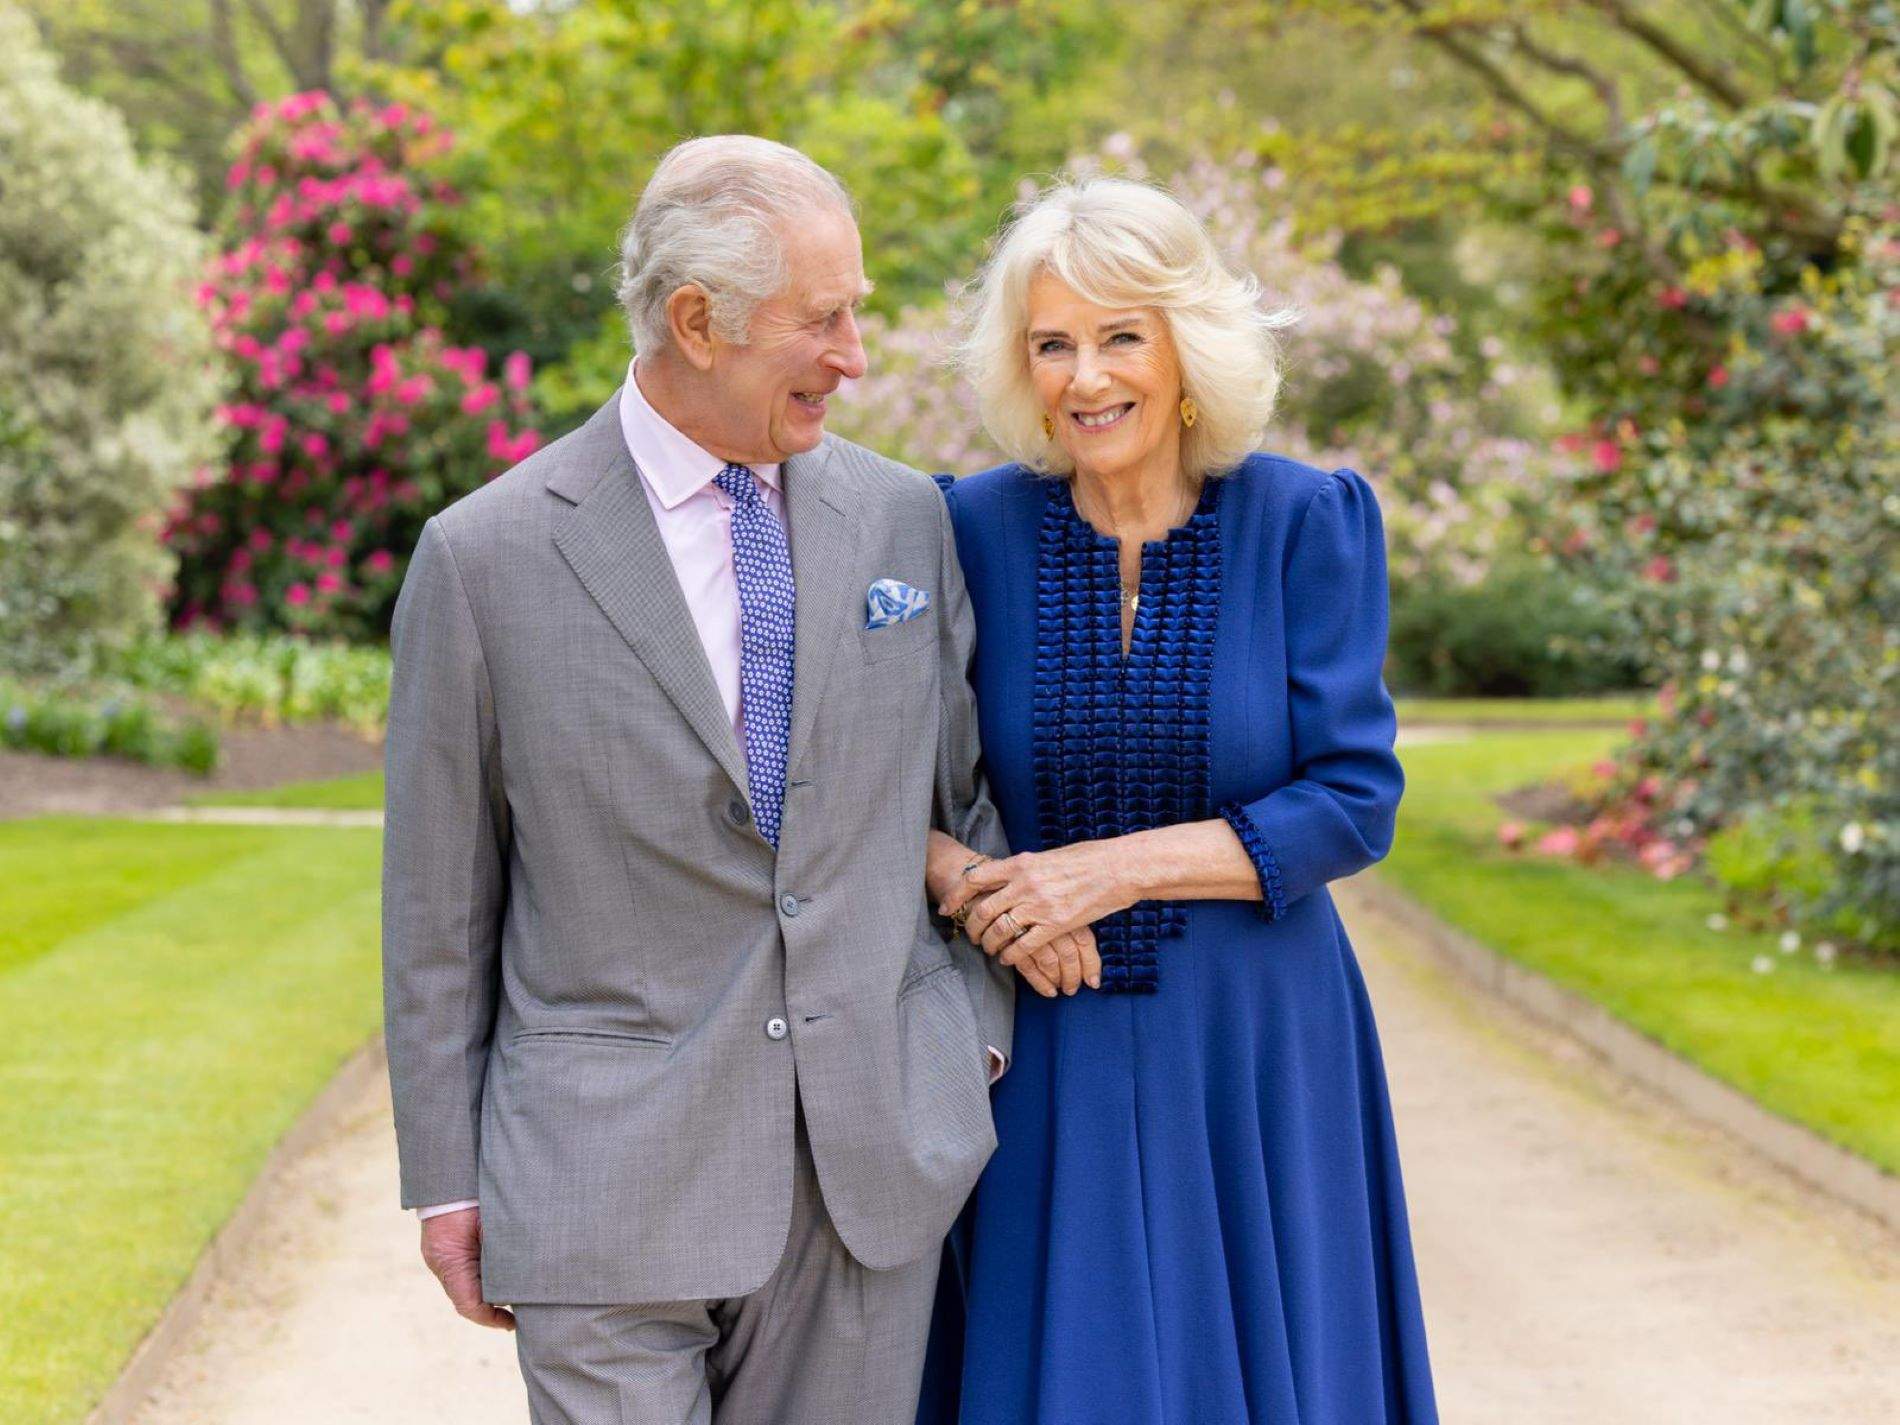 Rei Carles III i reina Camilla, retorn vida publica / Familia reial britanica